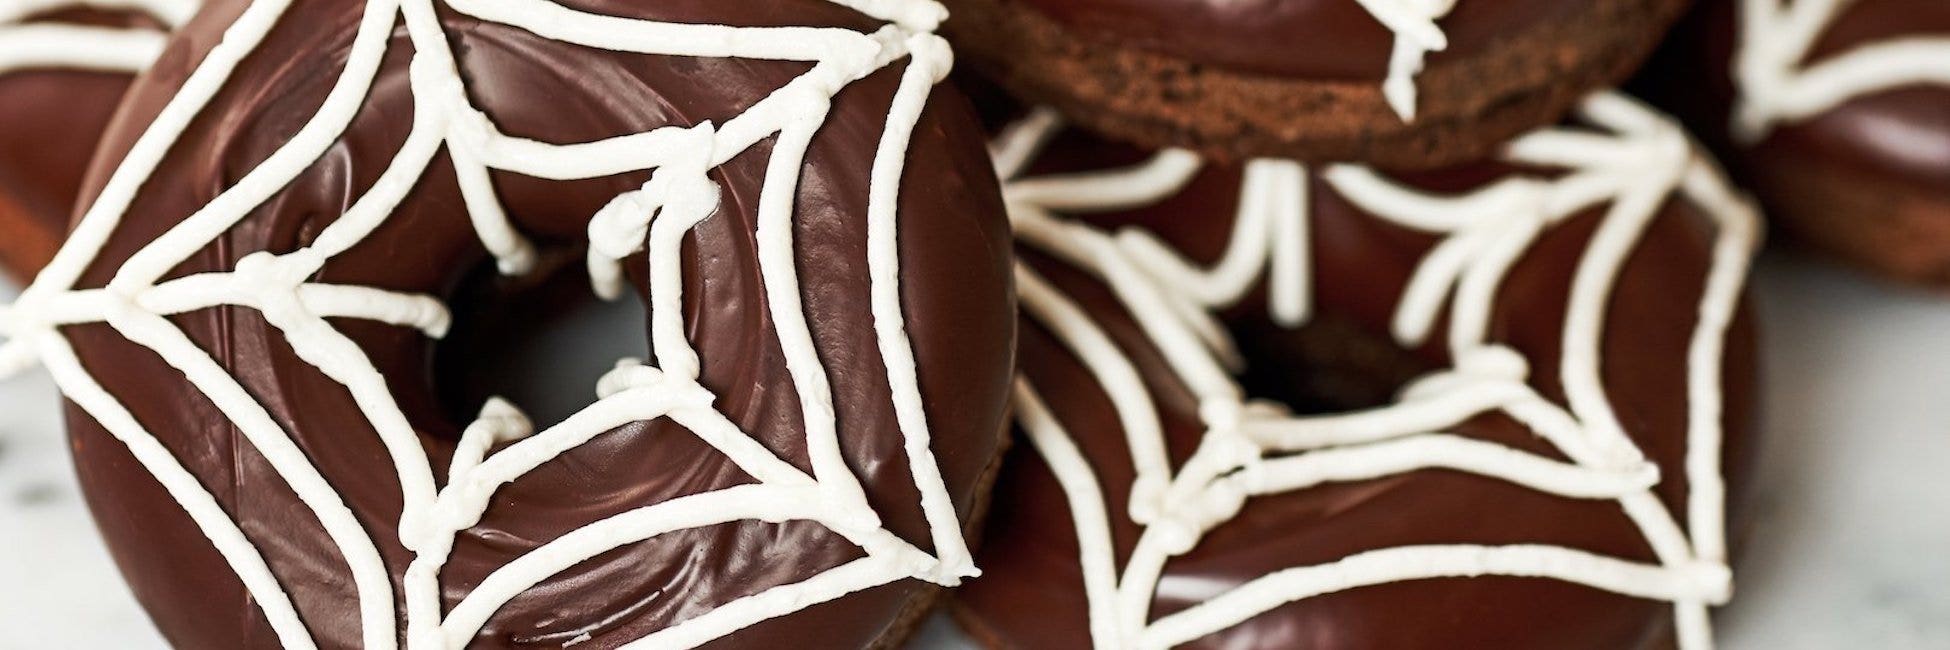 Chocolate Cobweb Donuts